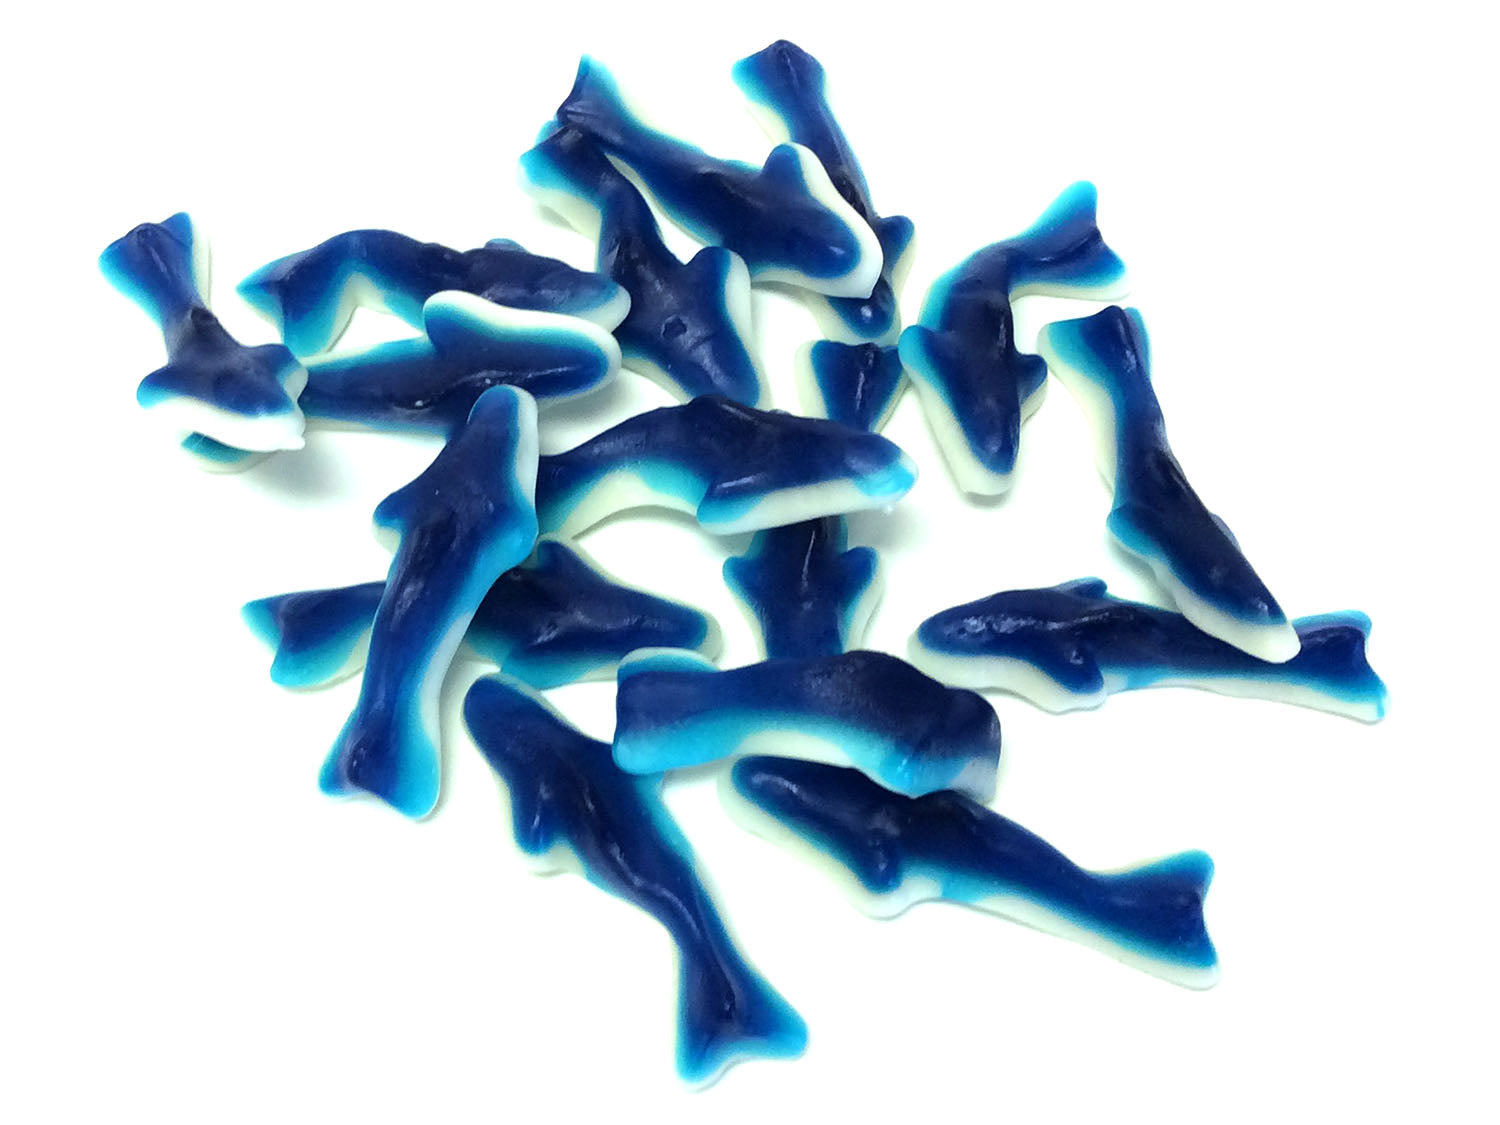 Gummi Blue Sharks - Bulk 3 lb bag